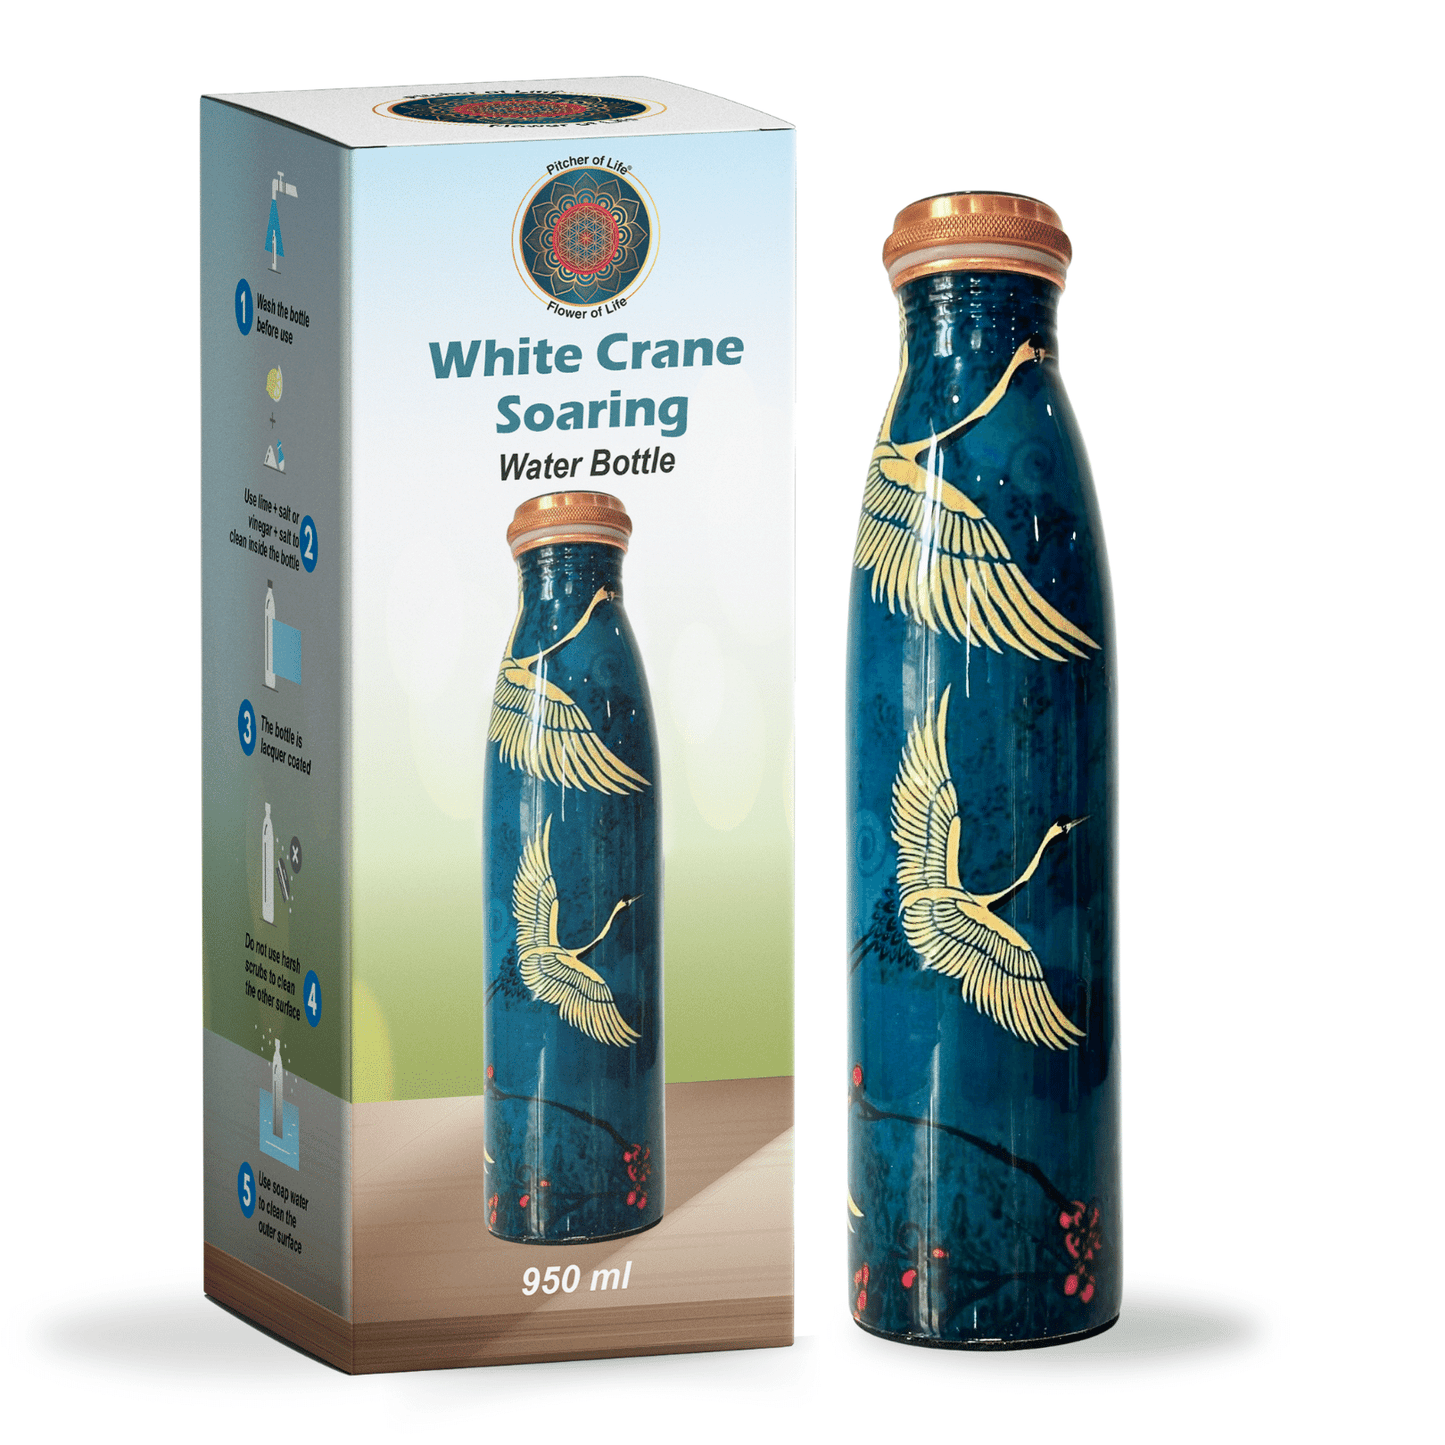 950mL Pure Copper Bottle - Igrets White Bird Design